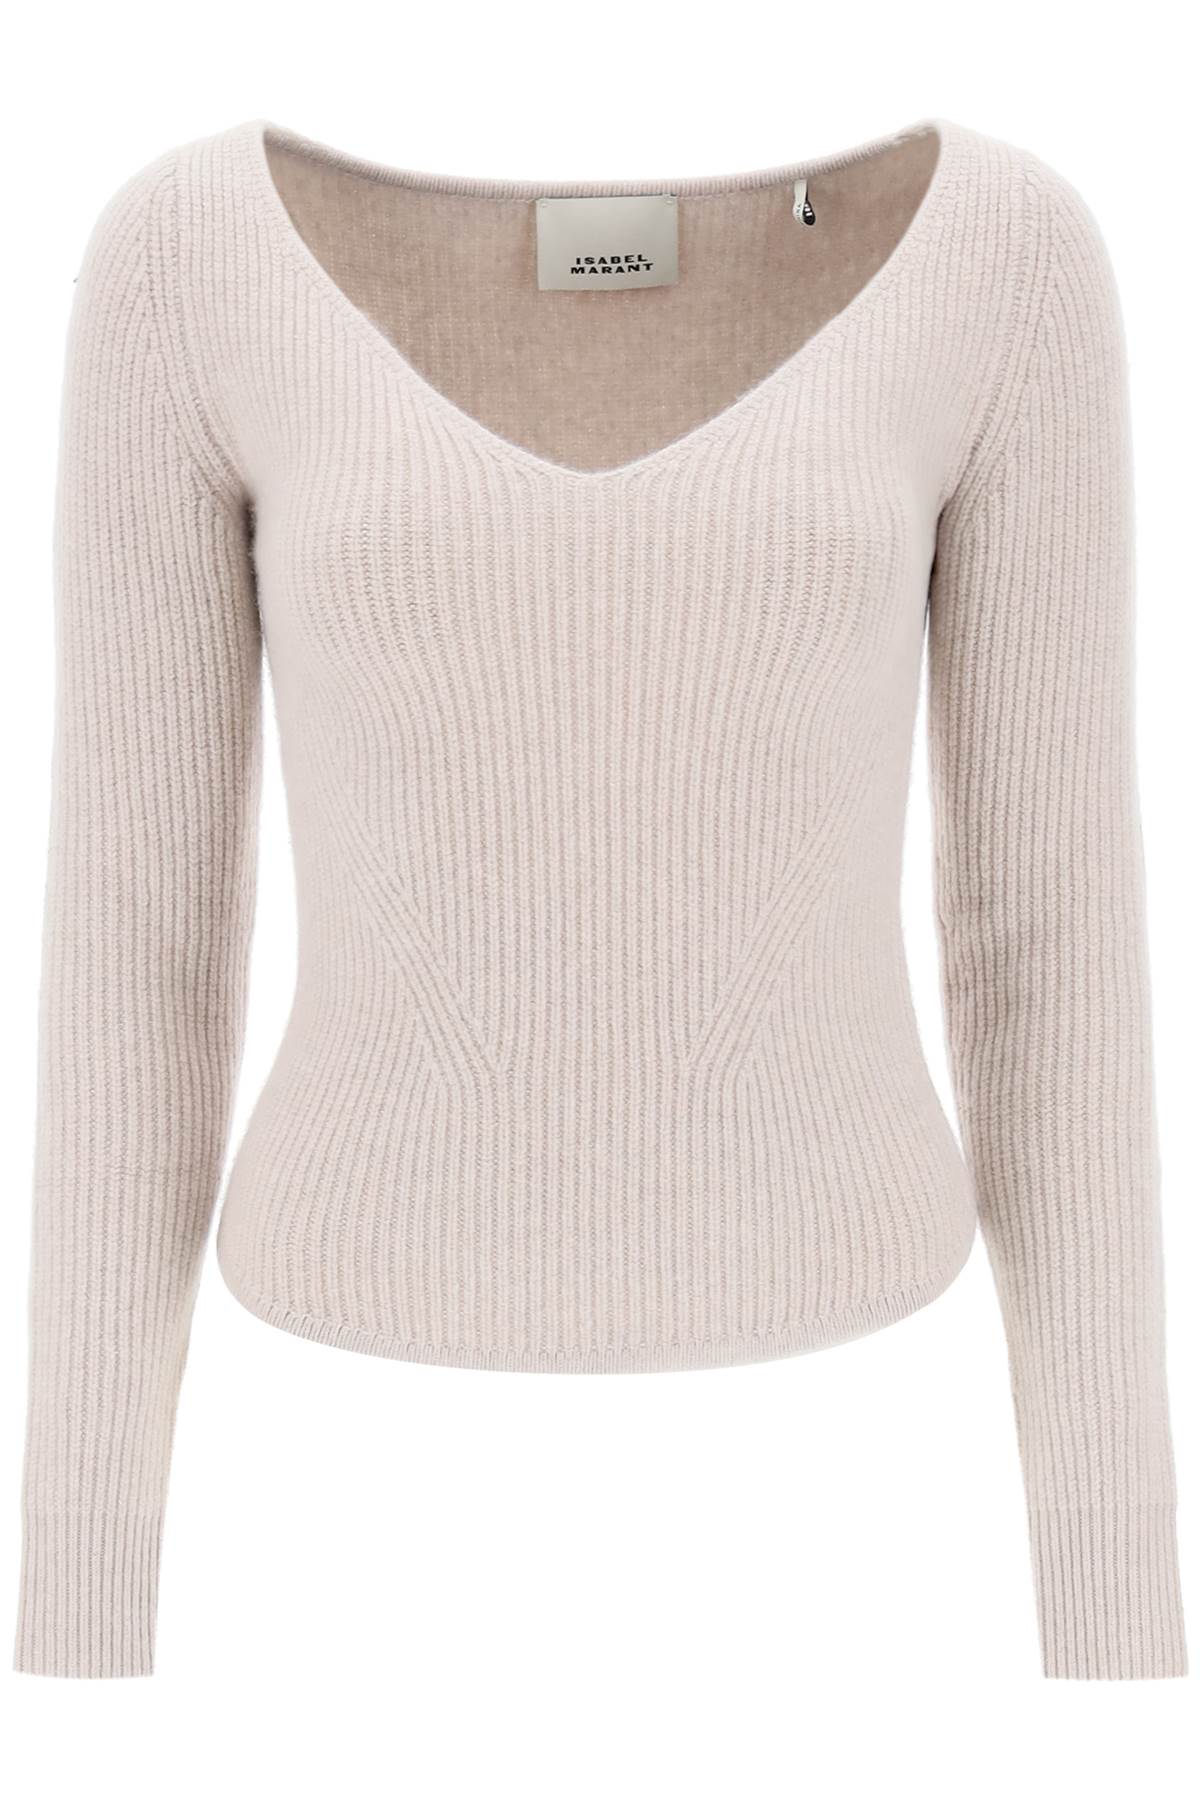 Isabel marant bricelia merino wool and cashmere sweater-0